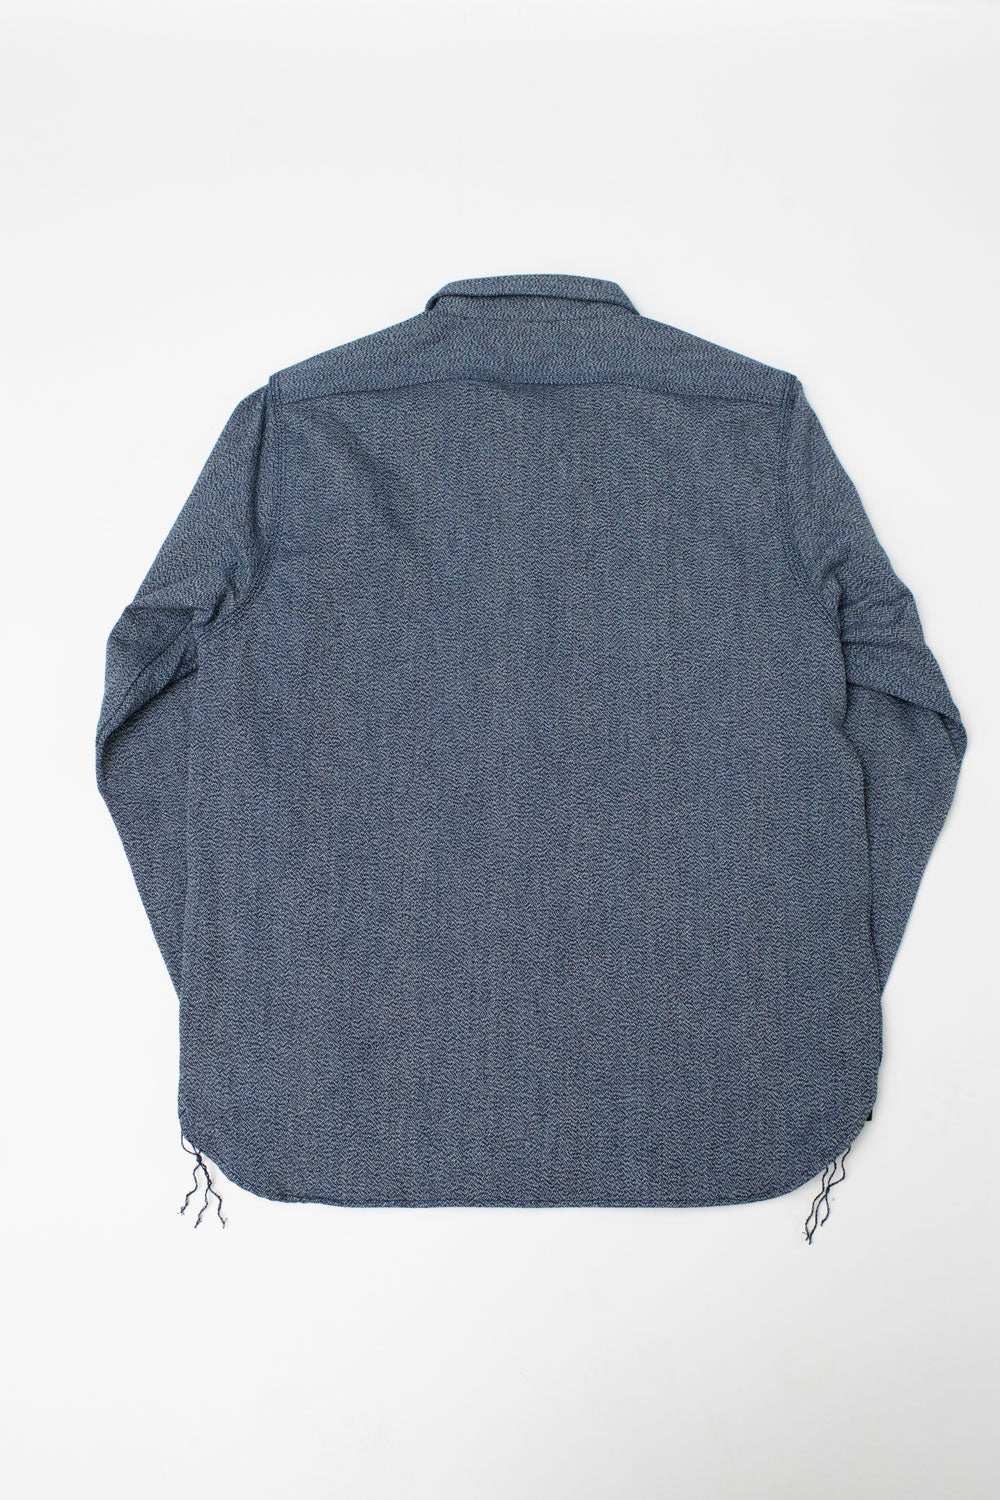 SSS23-AMW - Twisted Yarn Work Shirt - Natural Indigo